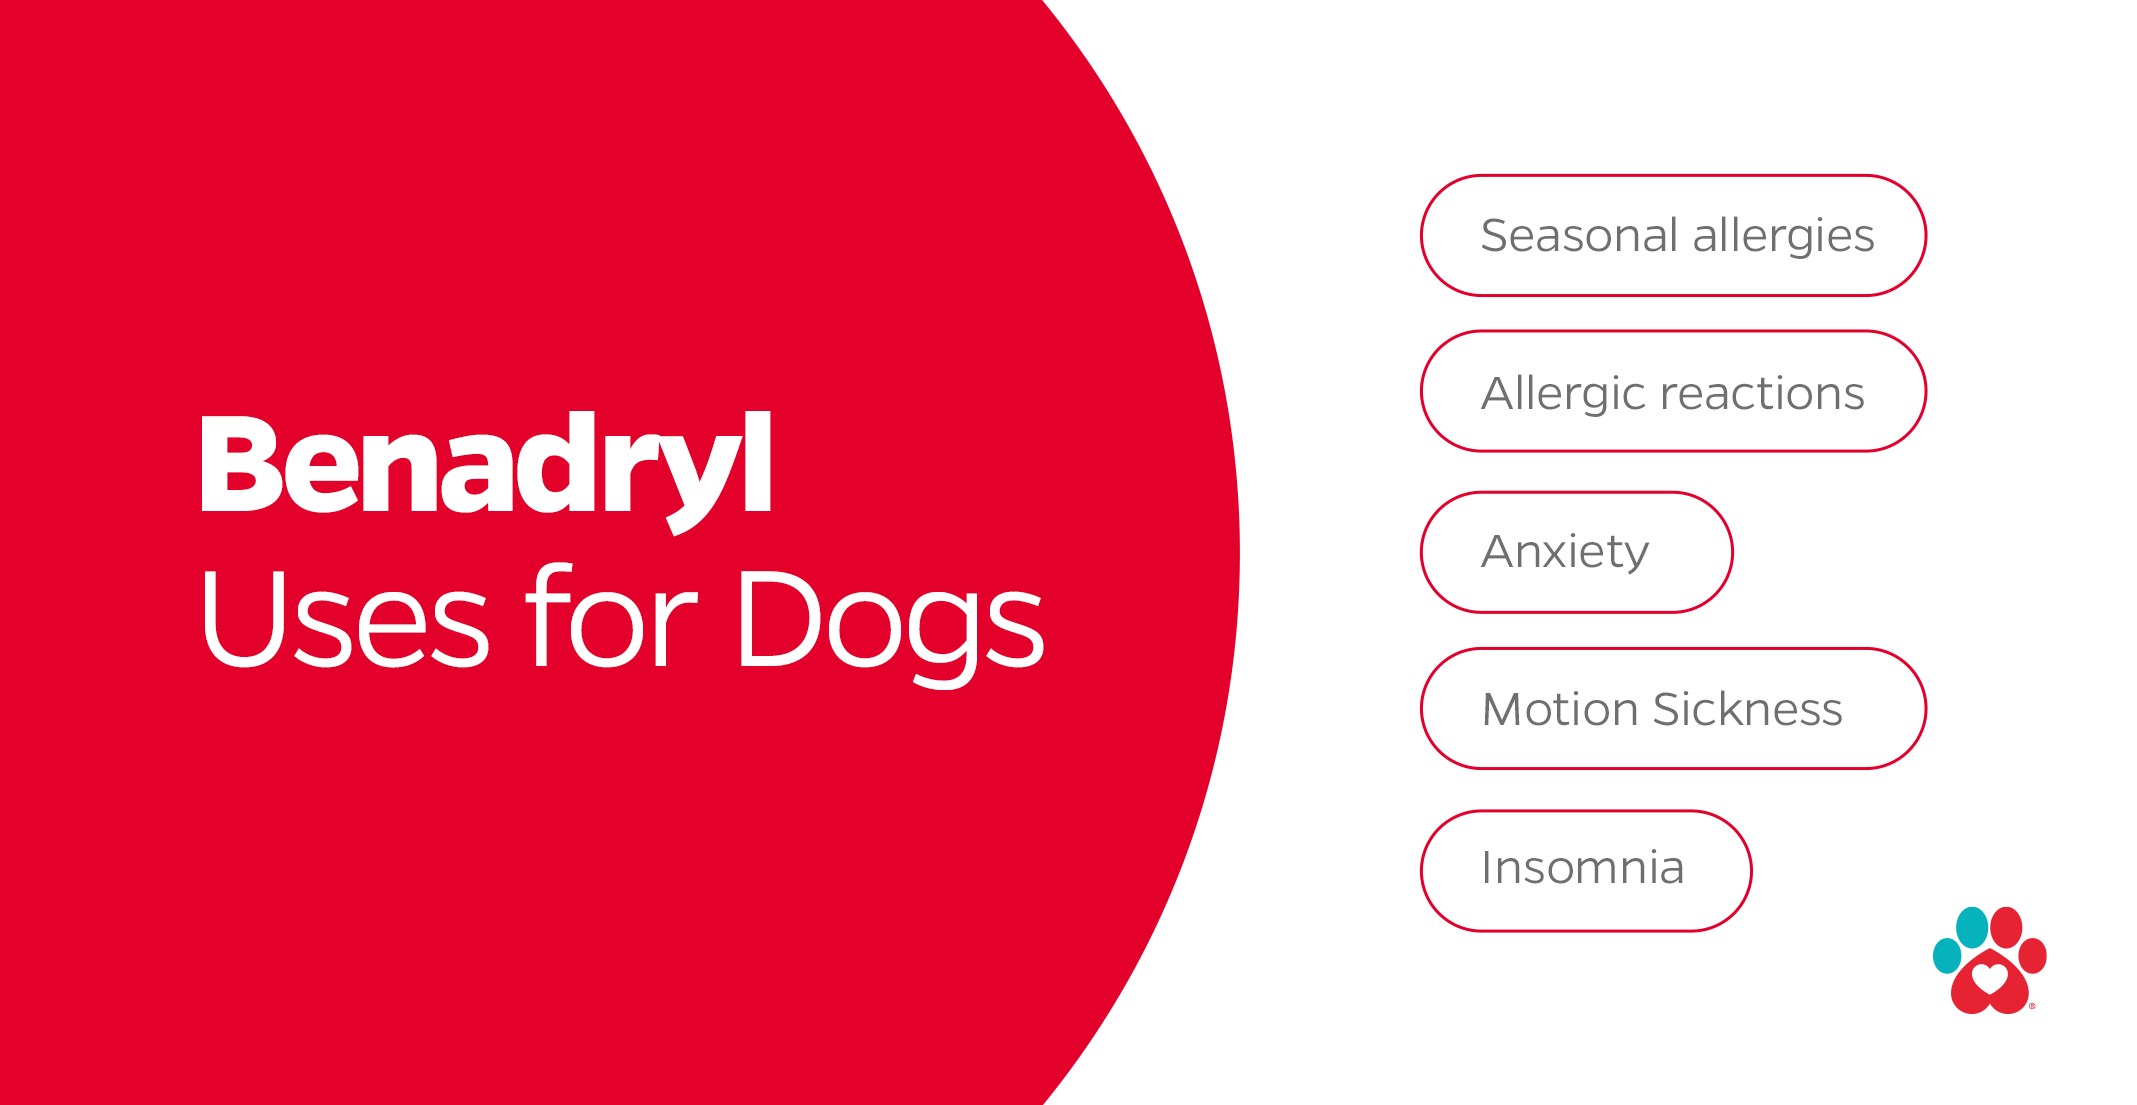 benadryl for dogs, benadryl uses for dogs